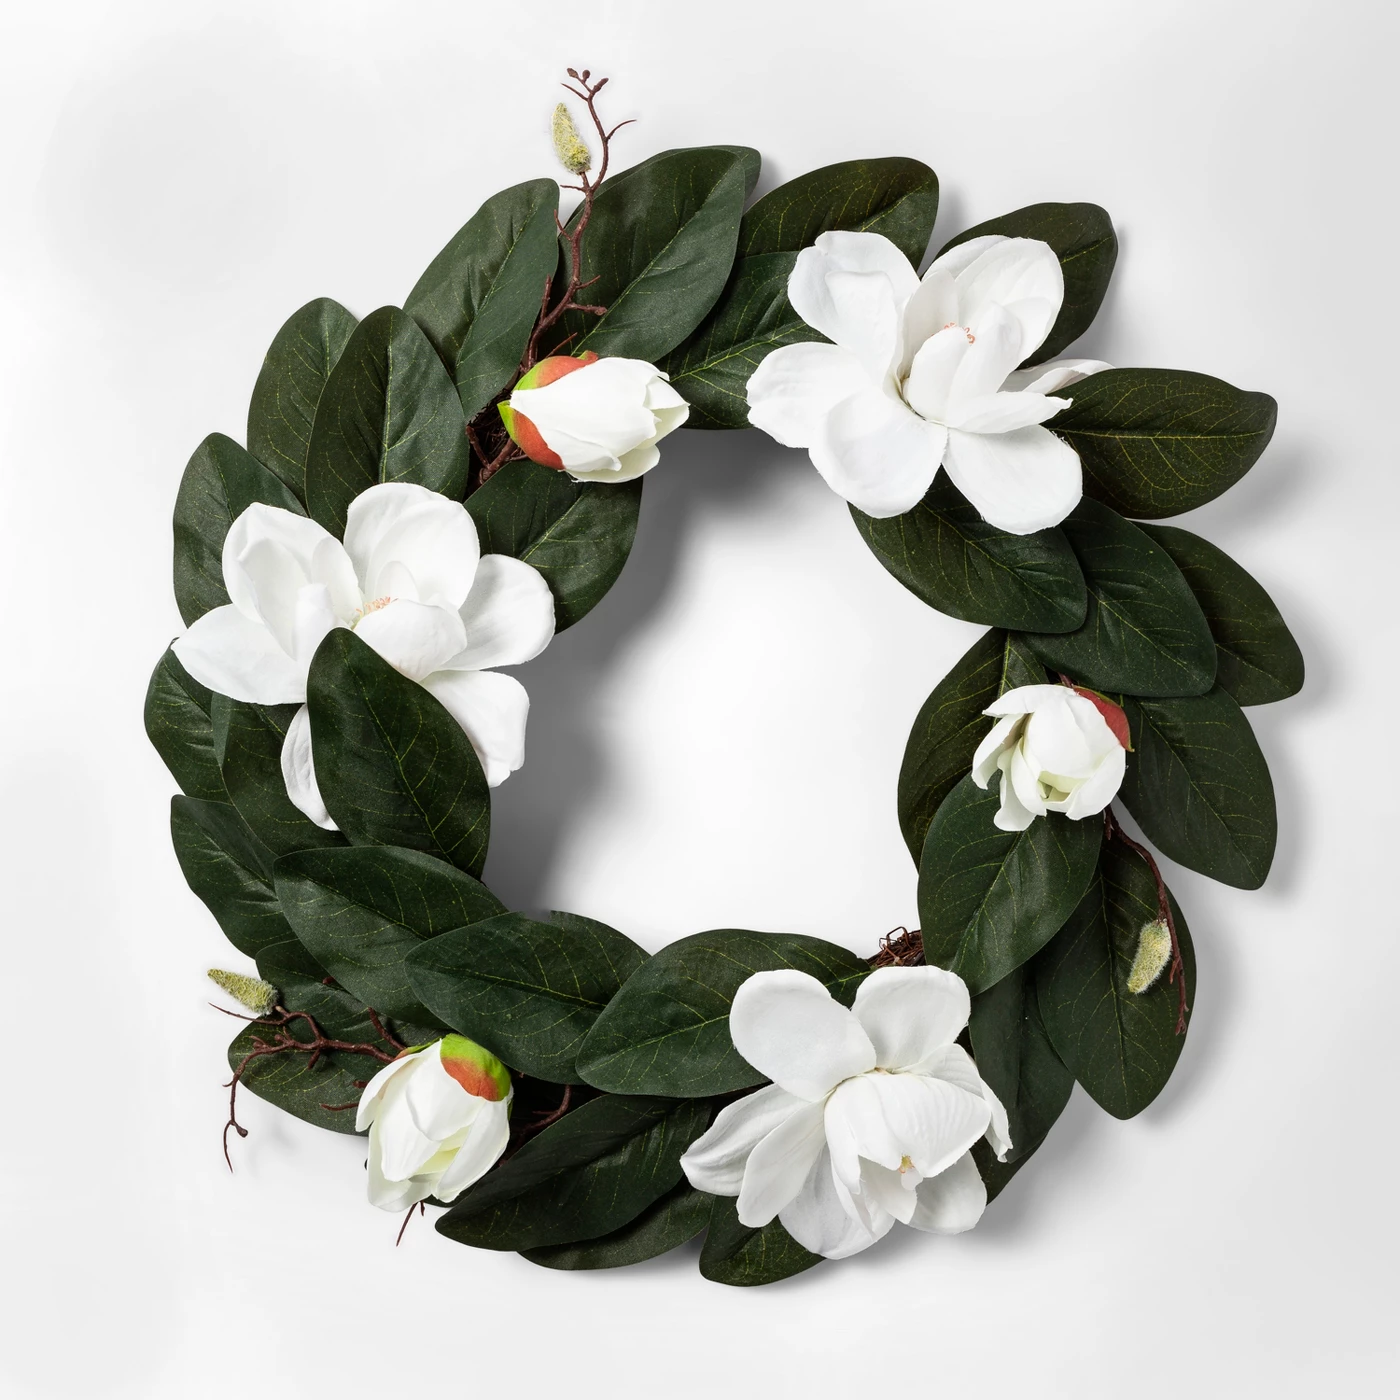 Decorative Artificial Wreath - Thresholdâ¢ - image 1 of 1